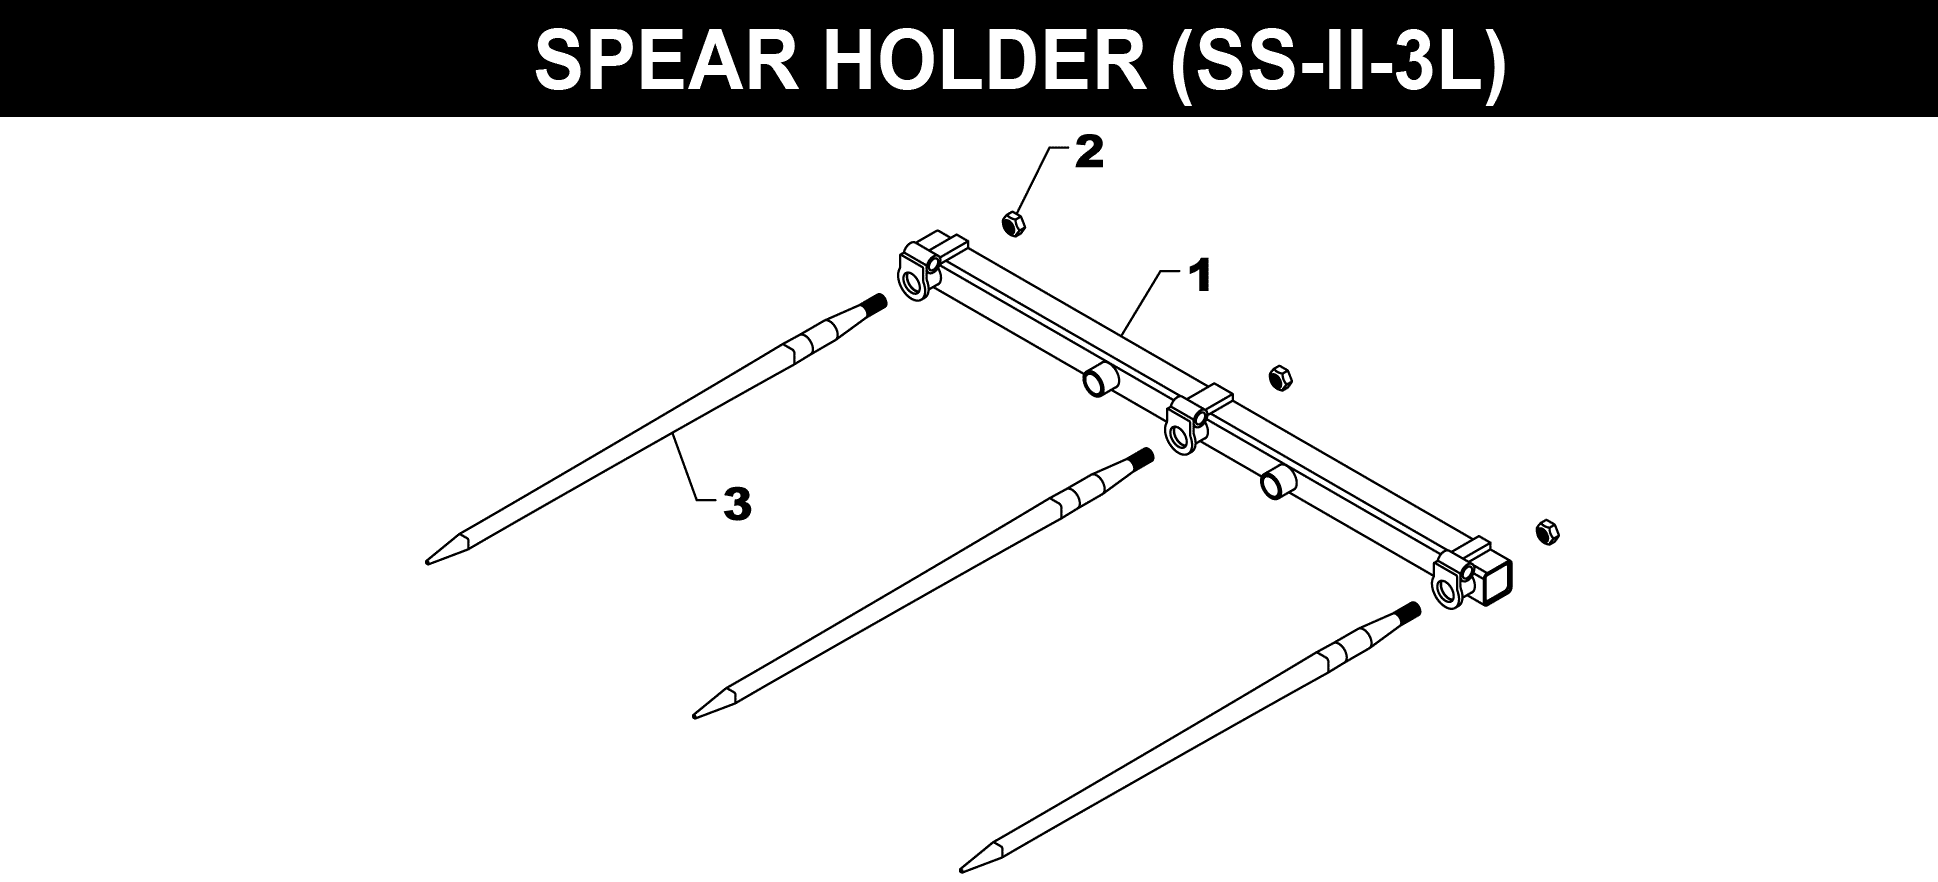 SS-II-3L Spear Holder